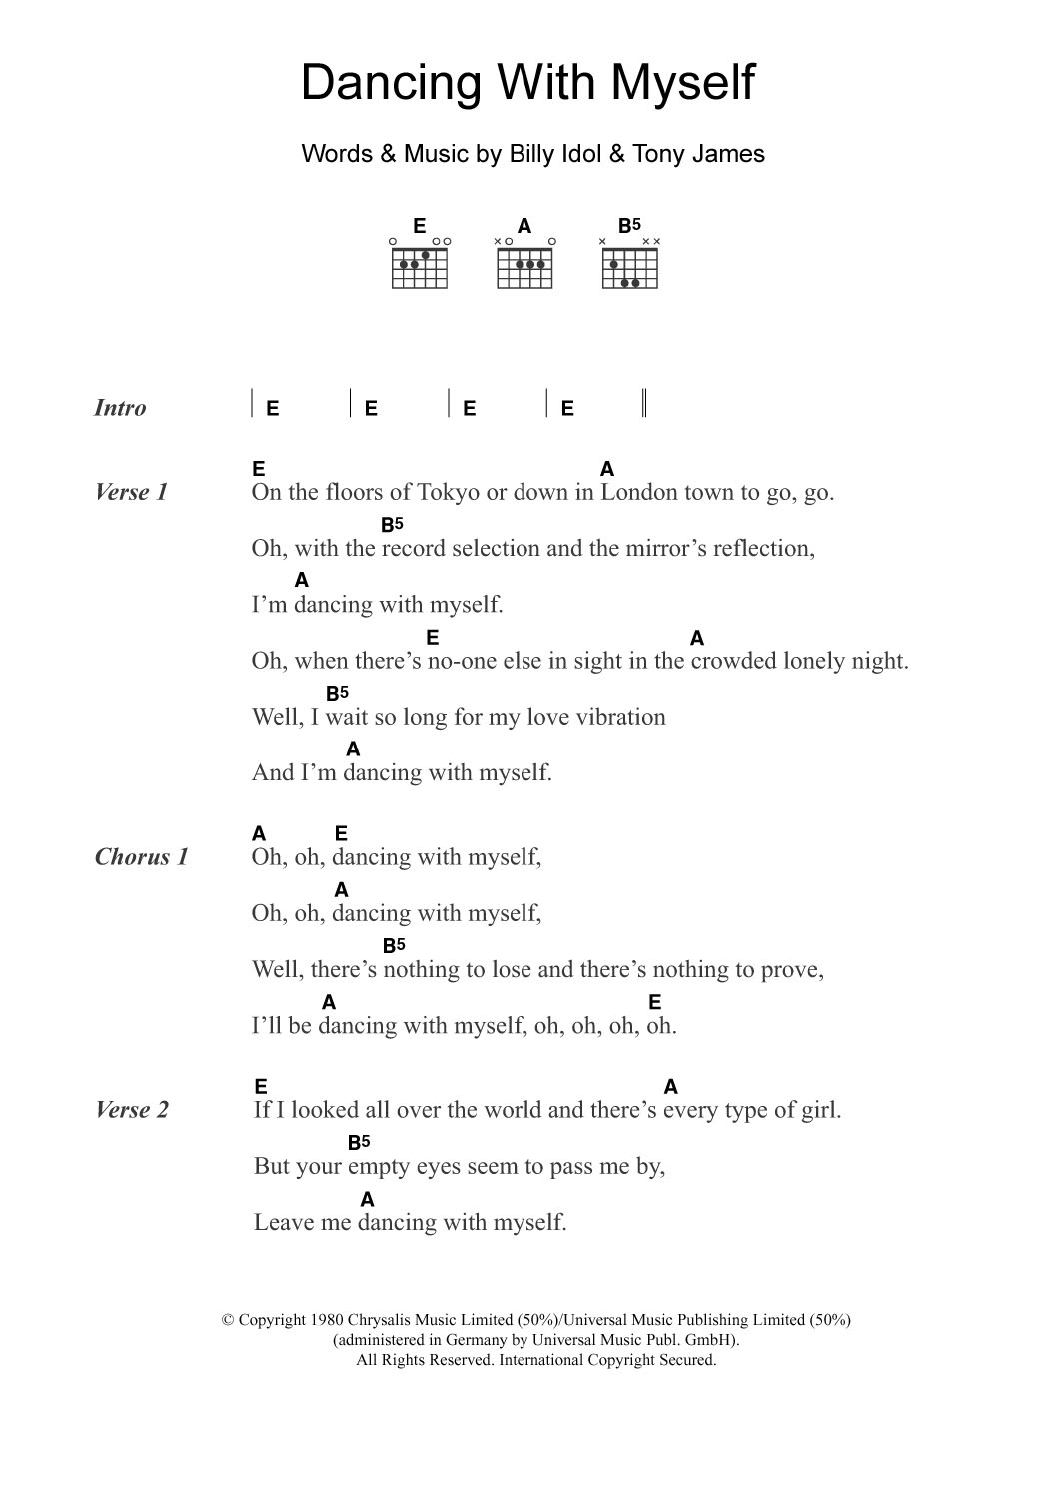 Generation X Dancing With Myself Sheet Music Notes & Chords for Guitar Chords/Lyrics - Download or Print PDF